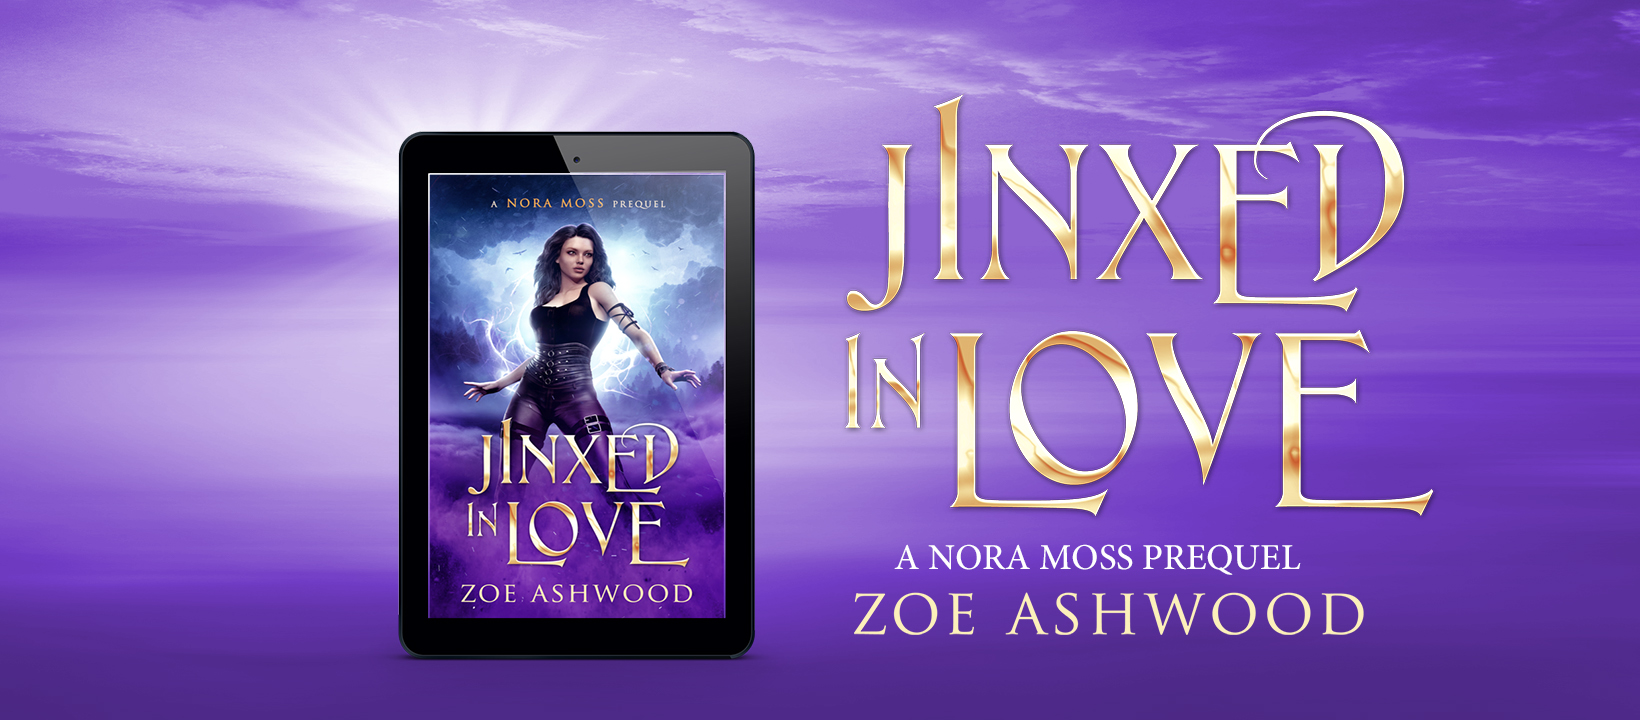 Jinxed in Love by Zoe Ashwood - reverse harem paranormal romance